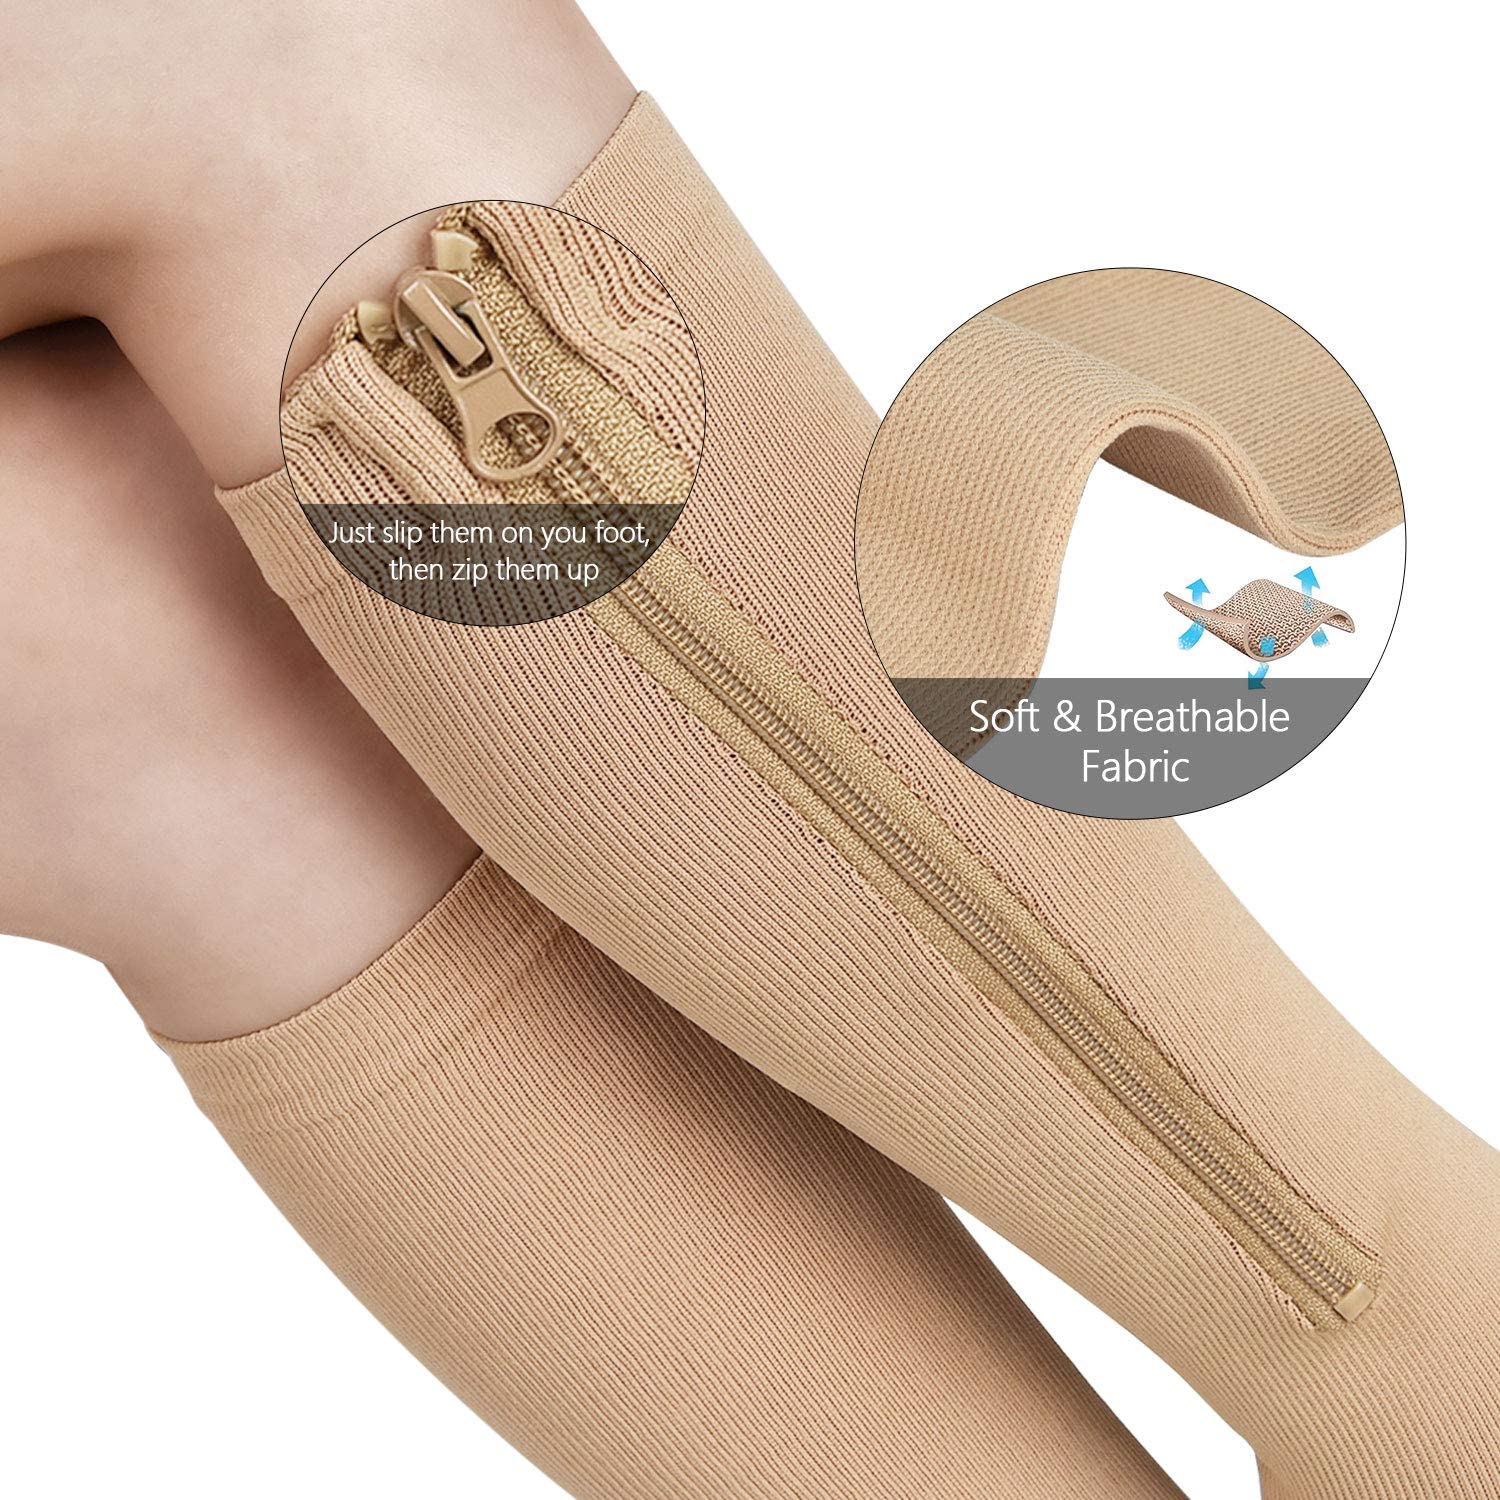 Zipper Compression Socks 15-20 mmHg for Men Women, Open Toe Leg